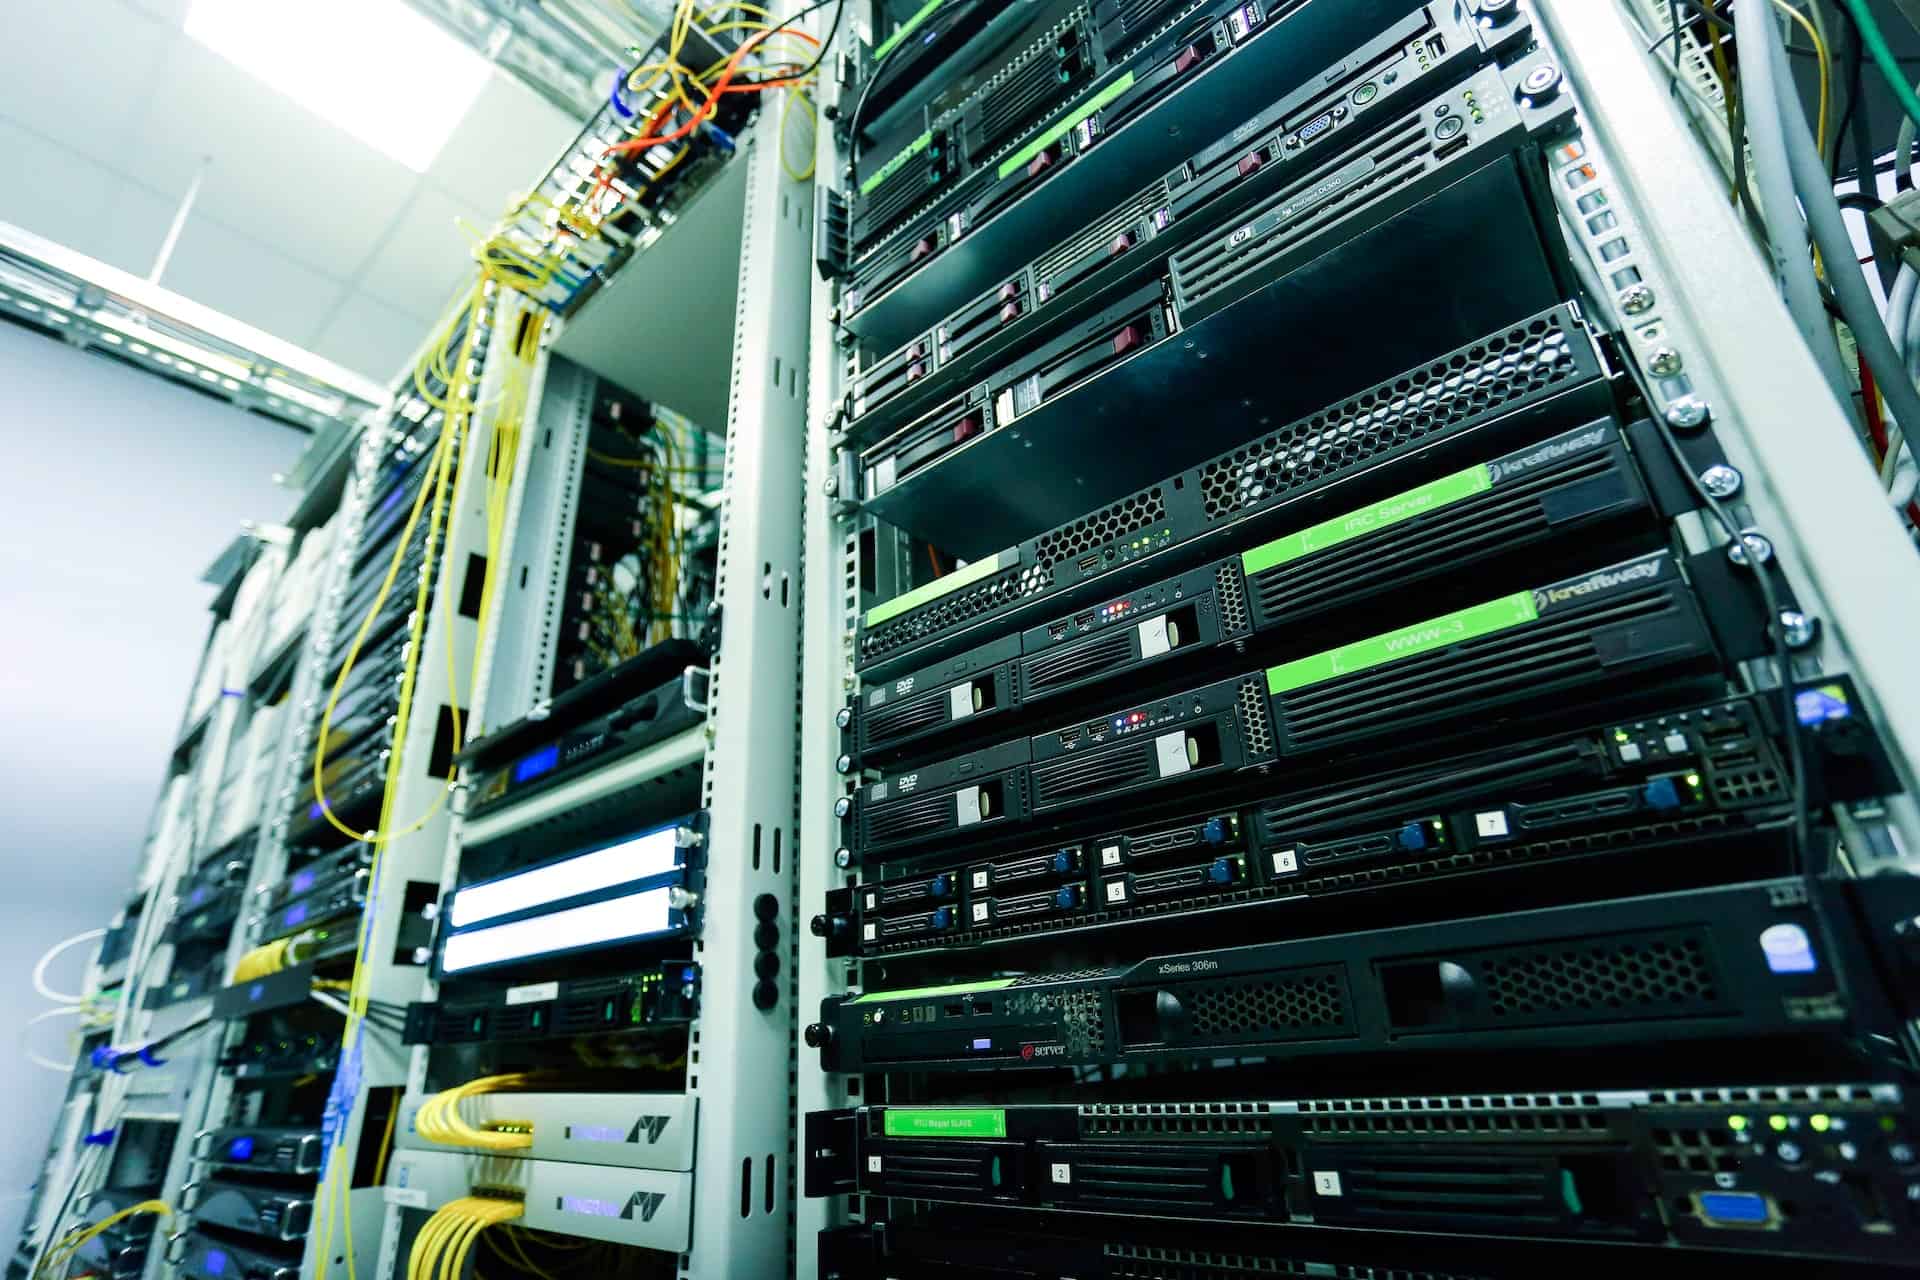 Racks full of servers and networking equipment